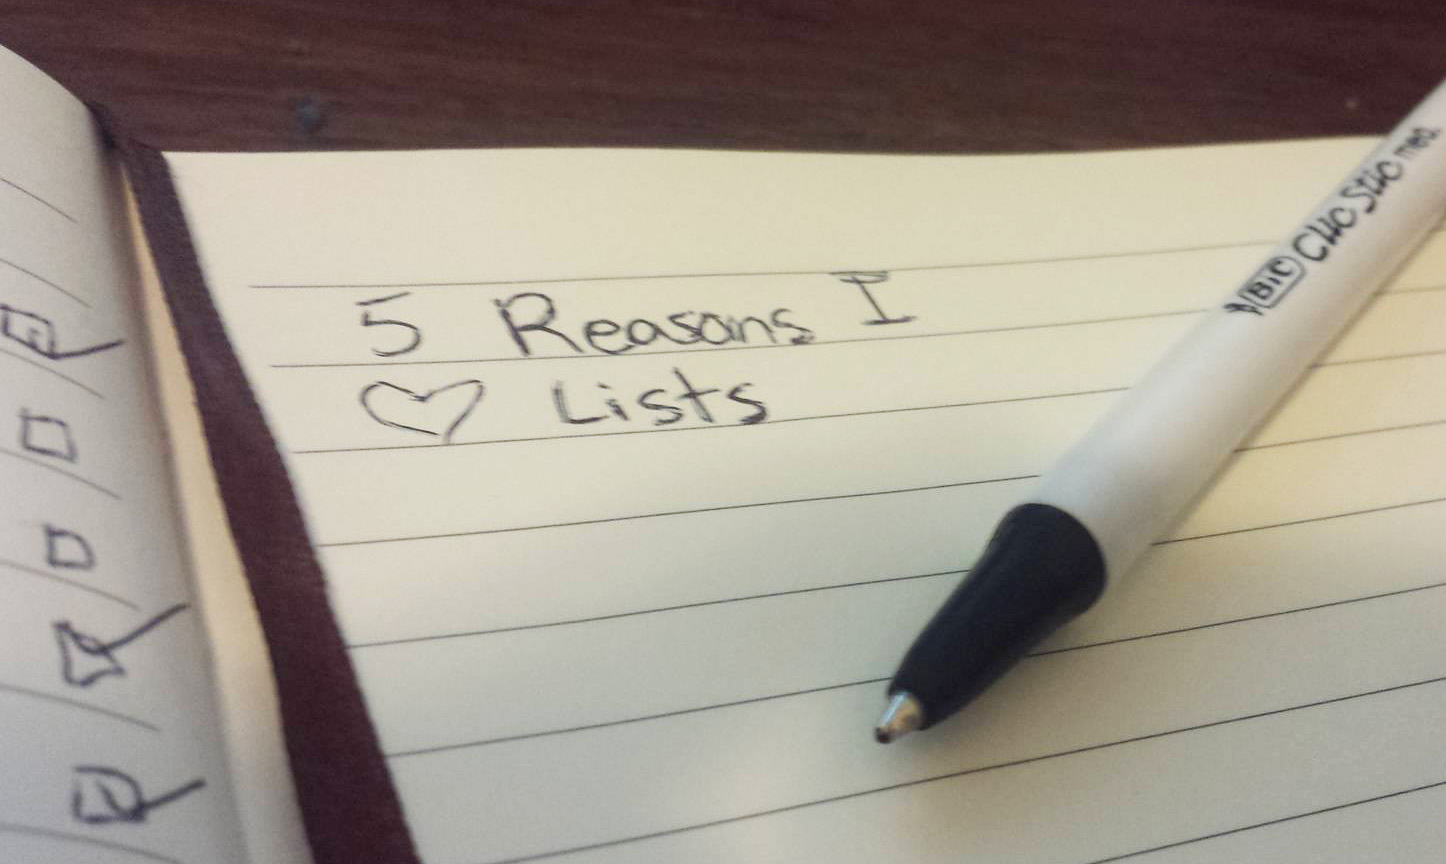 5 Reasons why I love lists